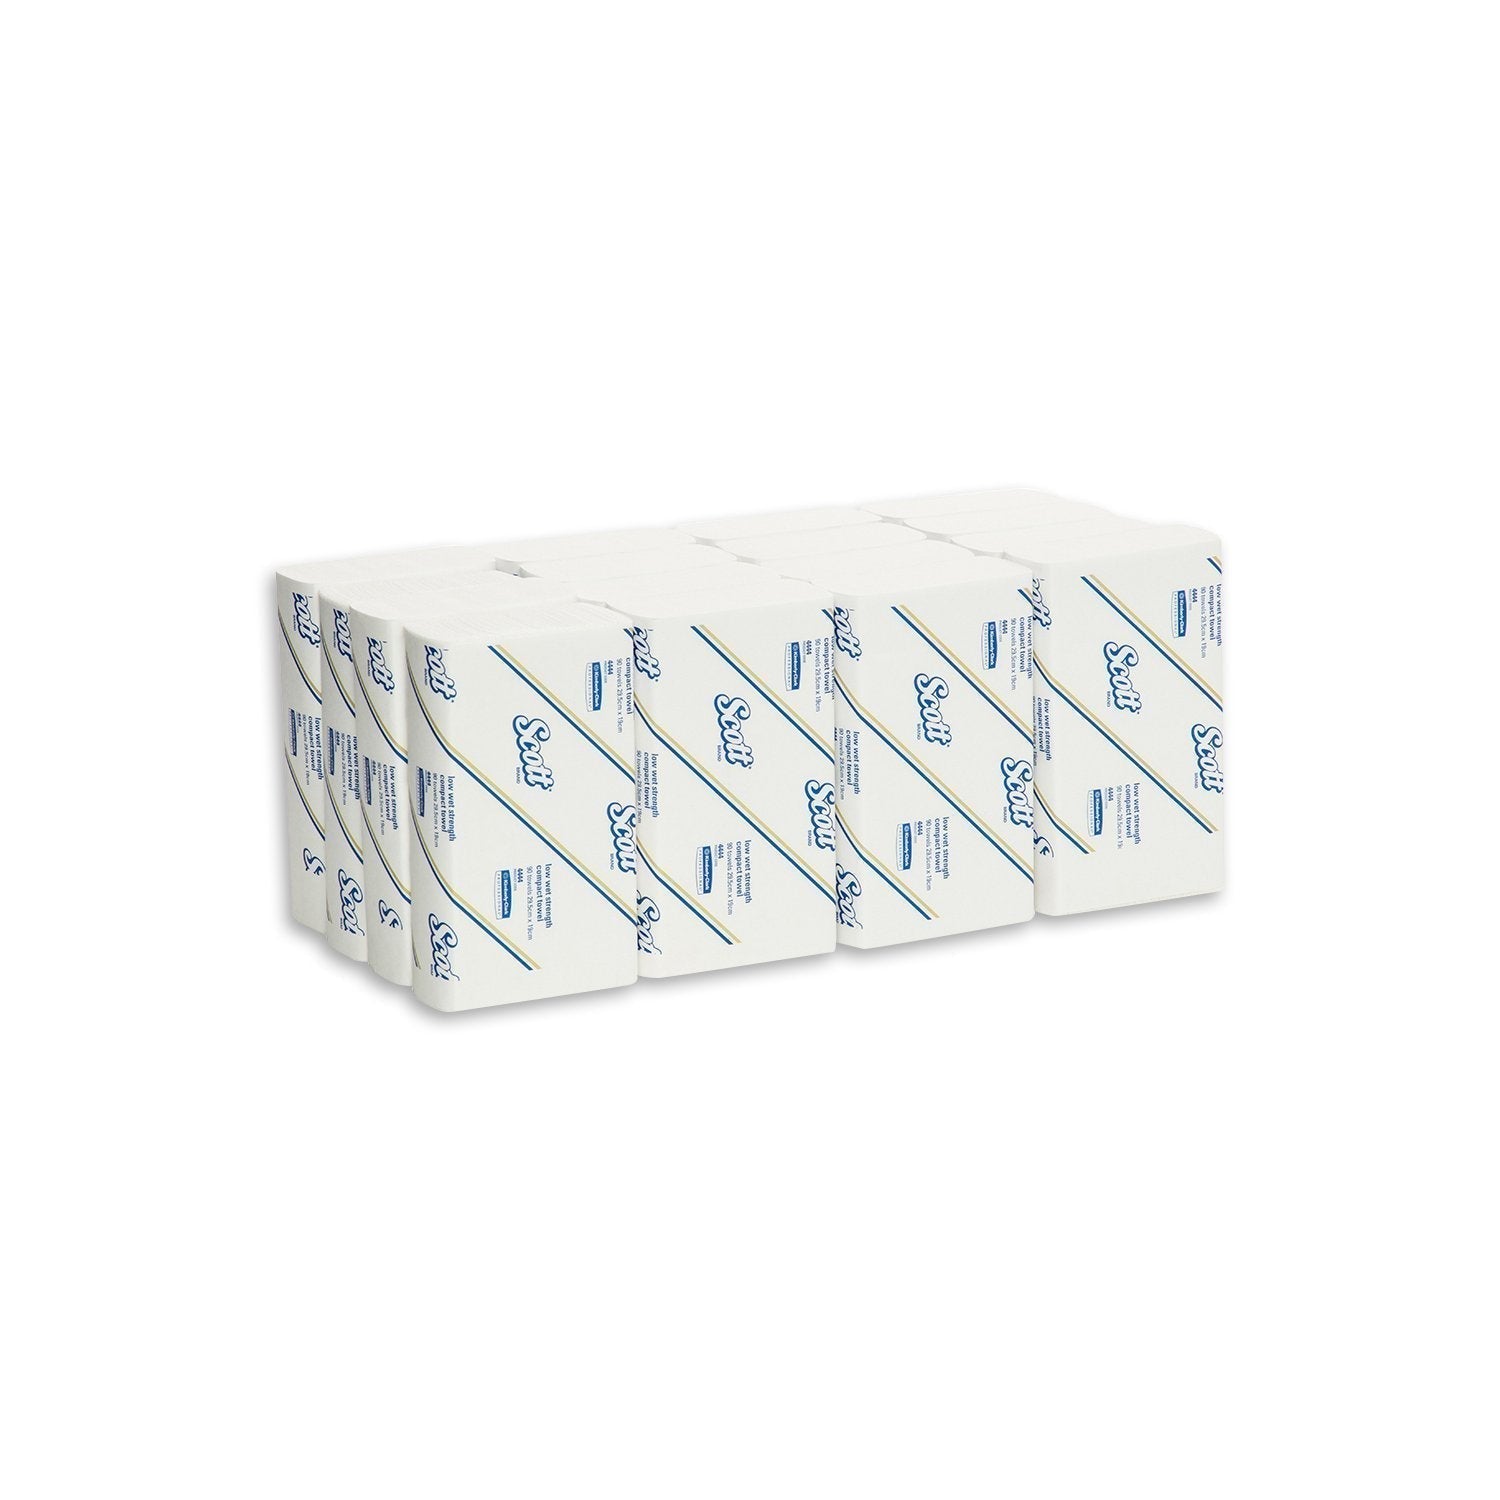 Kimberly-Clark Scott Towel LWS Compact White 90 sheets - CT/24 Bathroom Supplies Carton of 24 